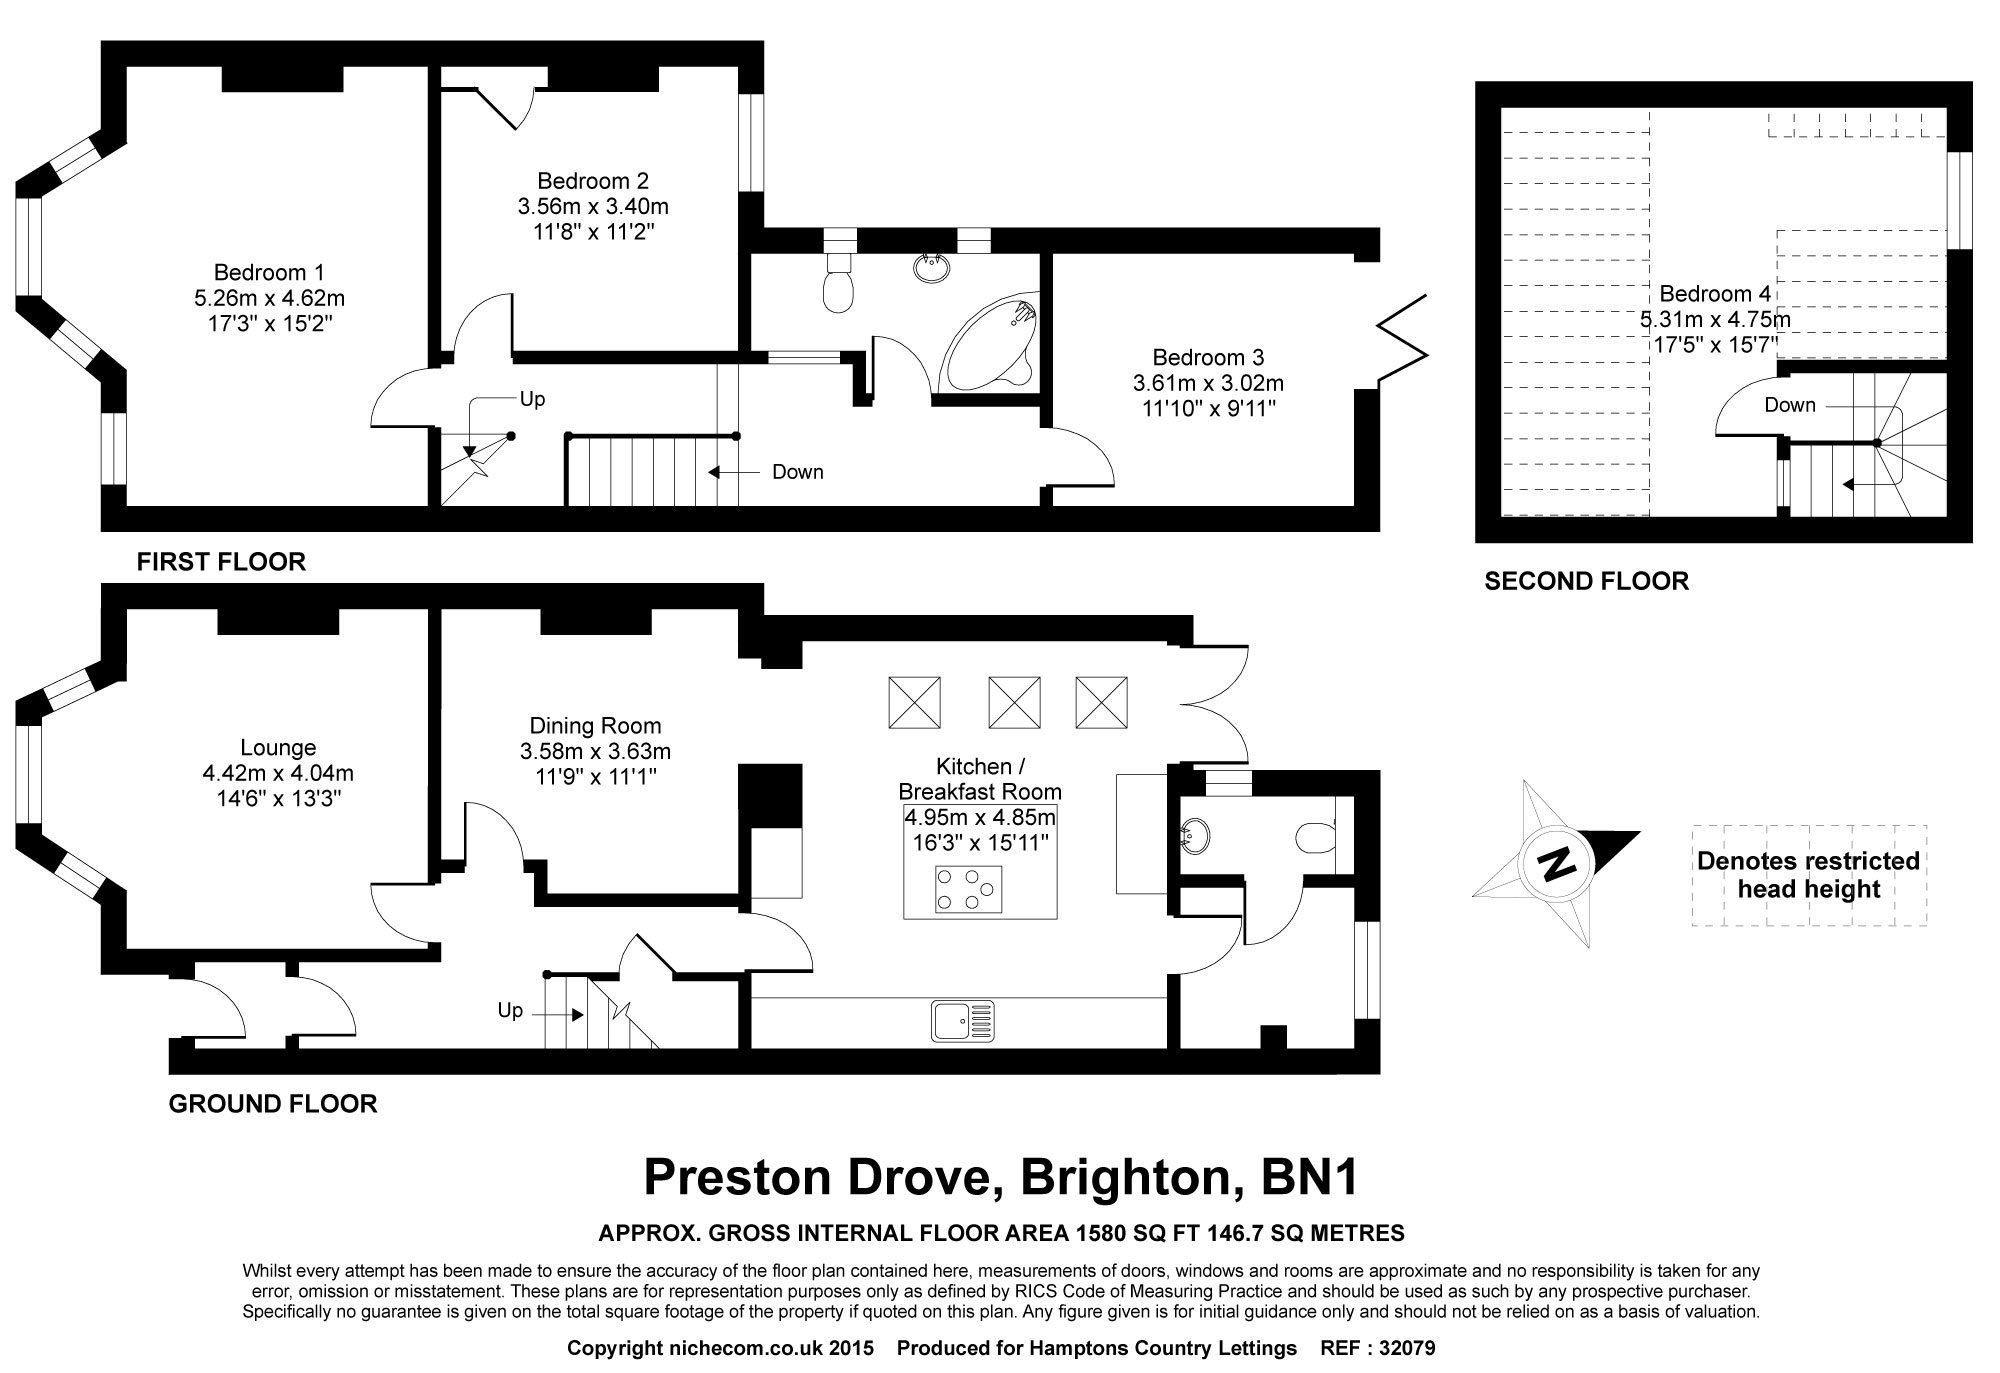 4 Bedrooms Terraced house to rent in Preston Drove, Brighton BN1